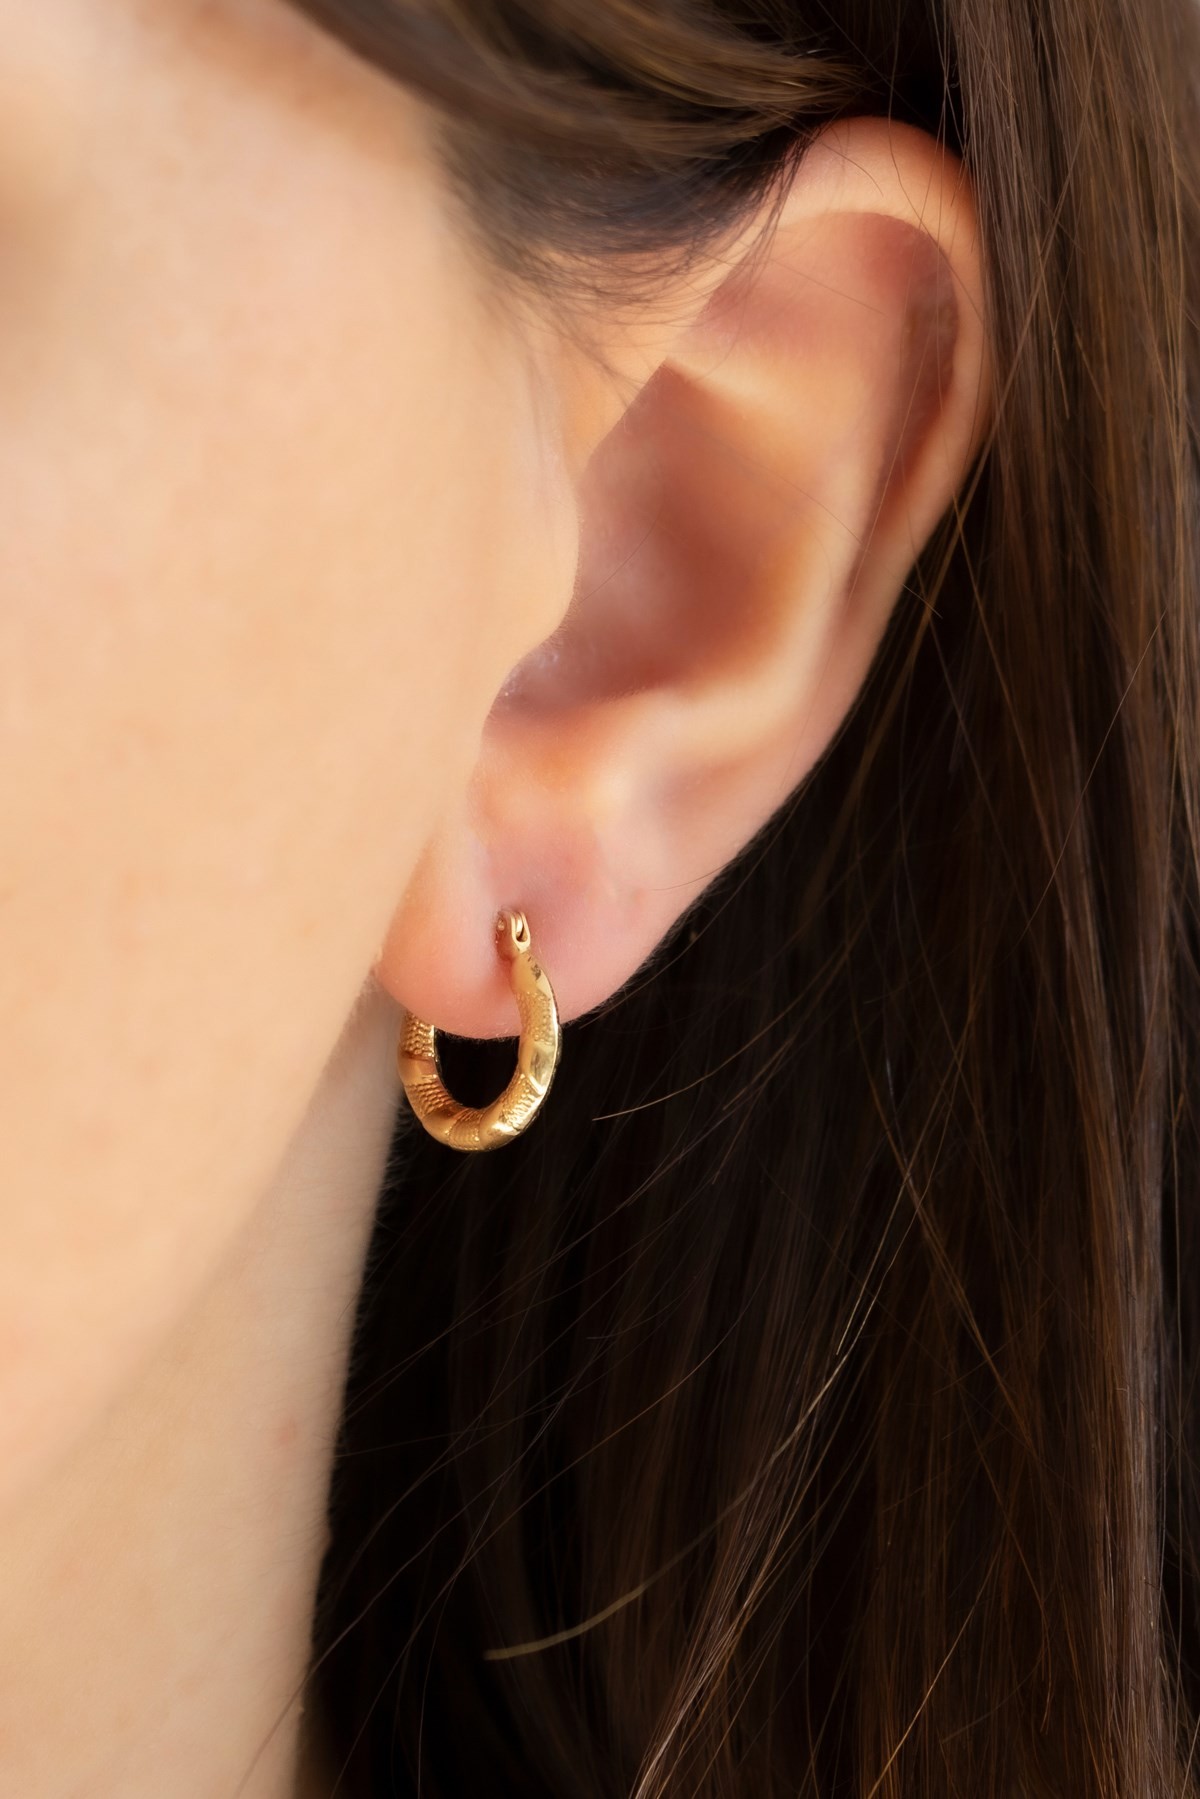 14 Carat Gold Patterned Modern Design Hoop Earrings